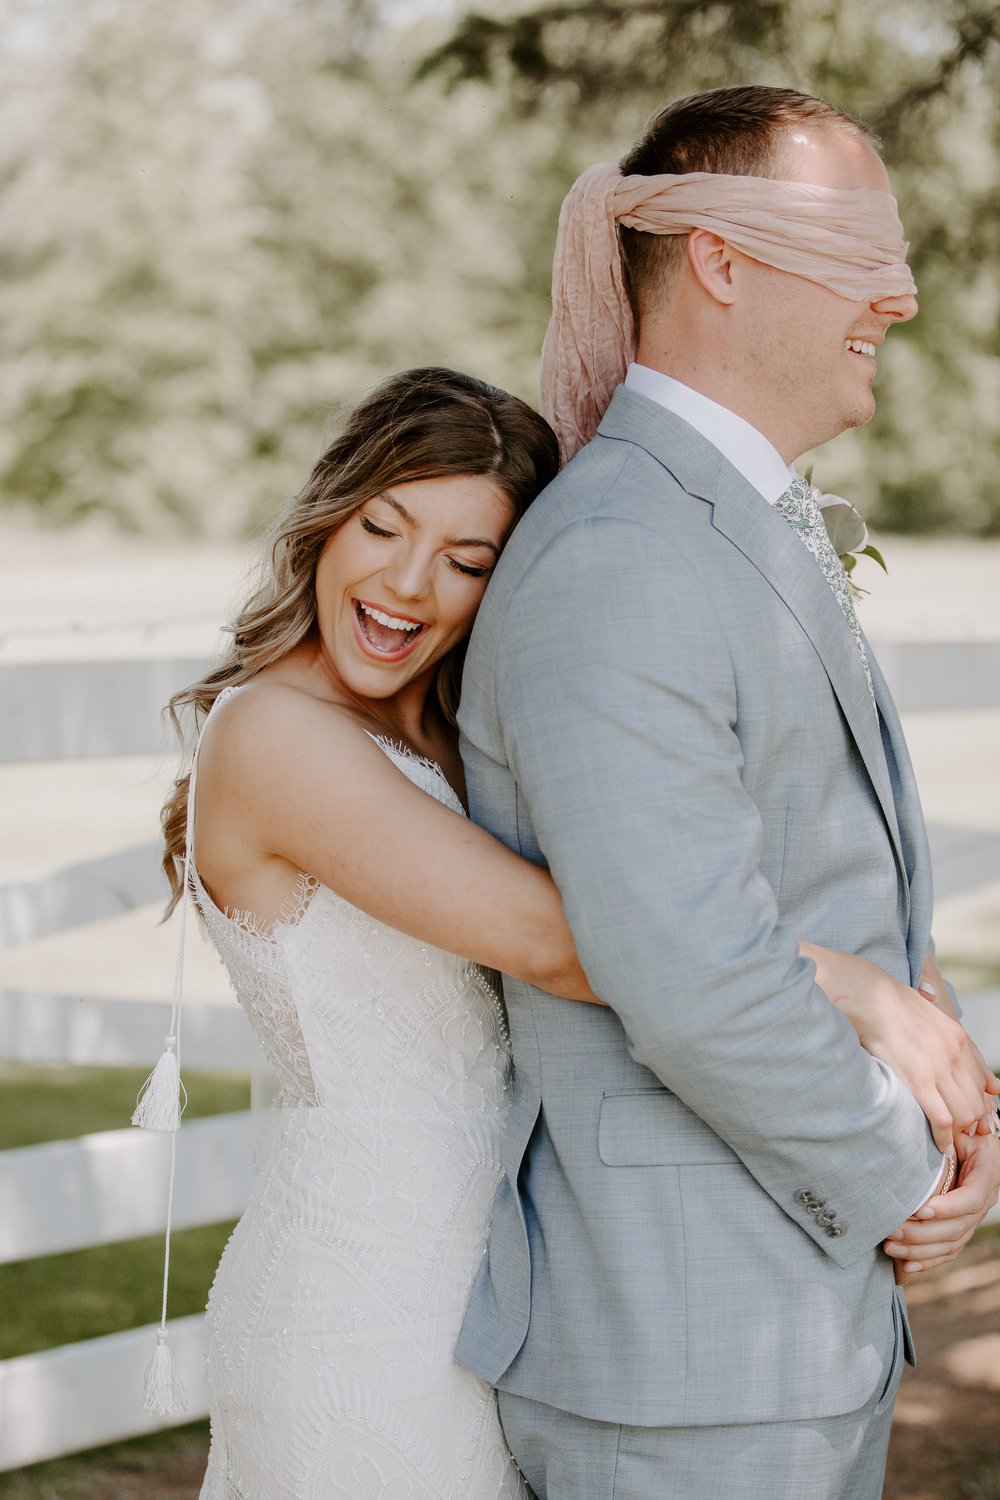 Bride embraces blindfolded groom during wedding first look